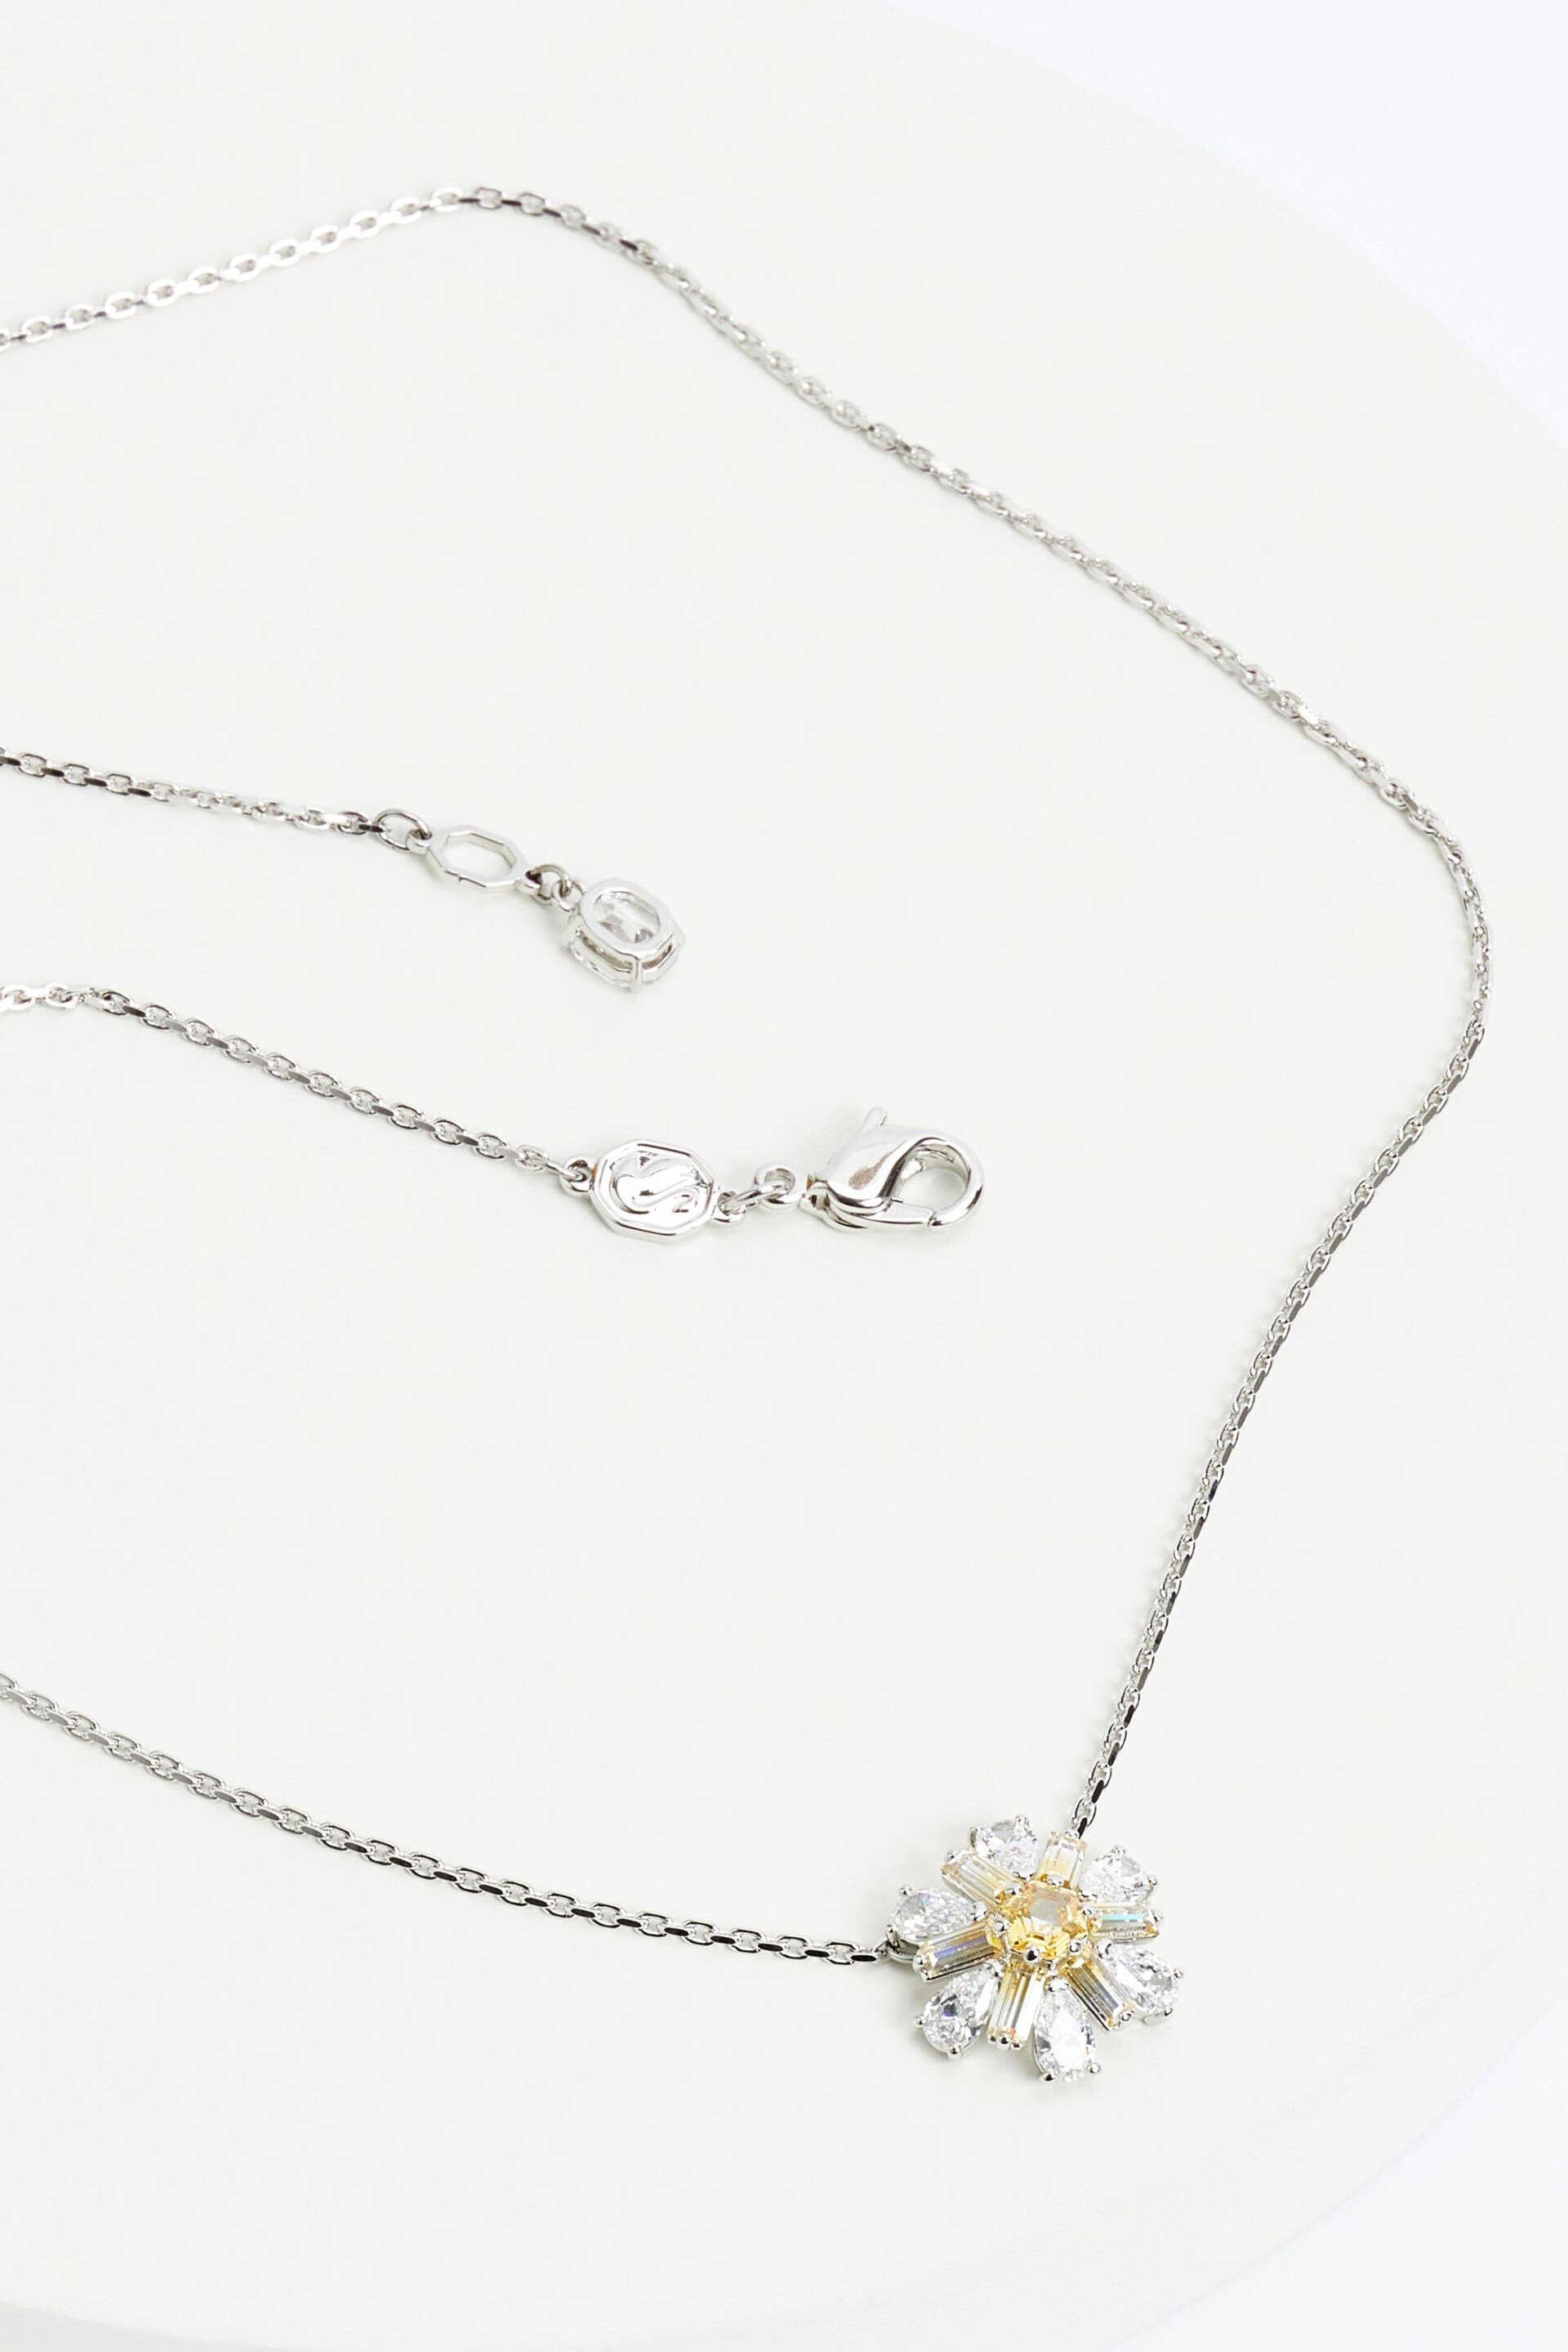 Swarovski Silver Daisy Crystal Necklace - Image 1 of 7